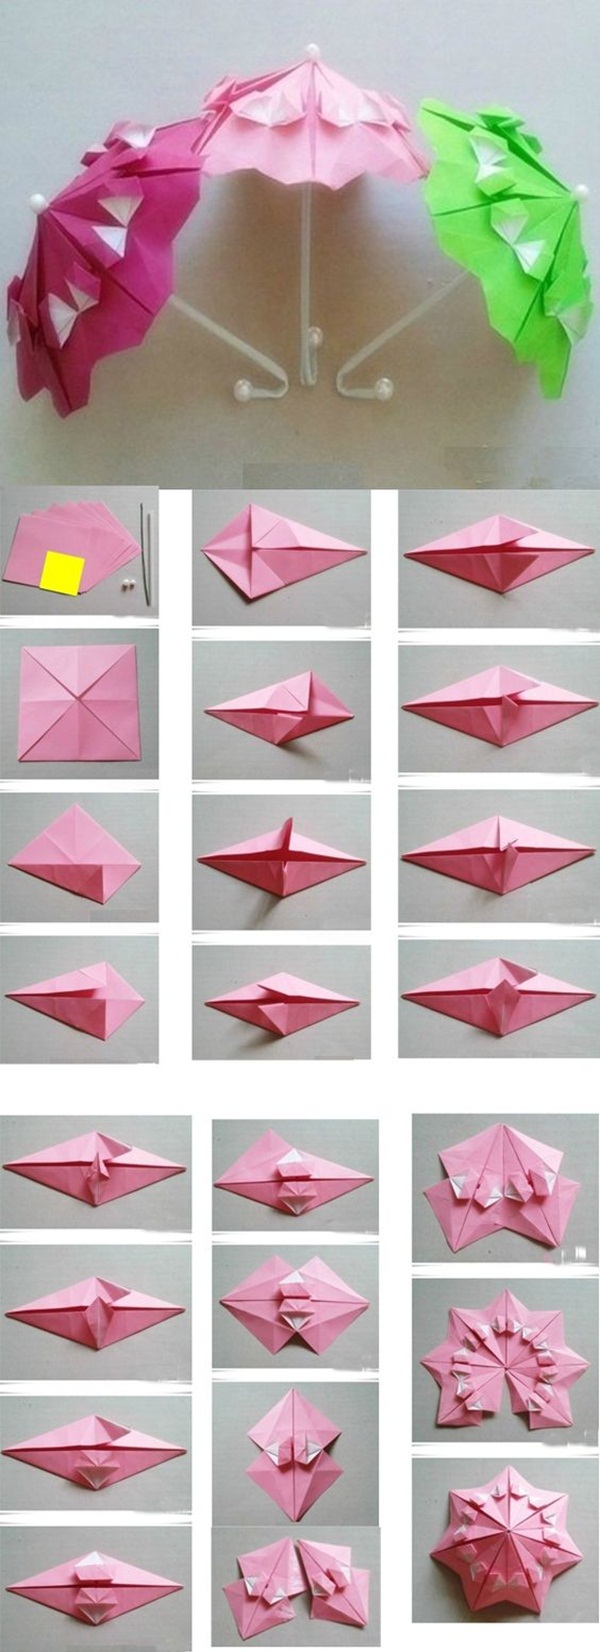 Easy-Origami-for-Kids19